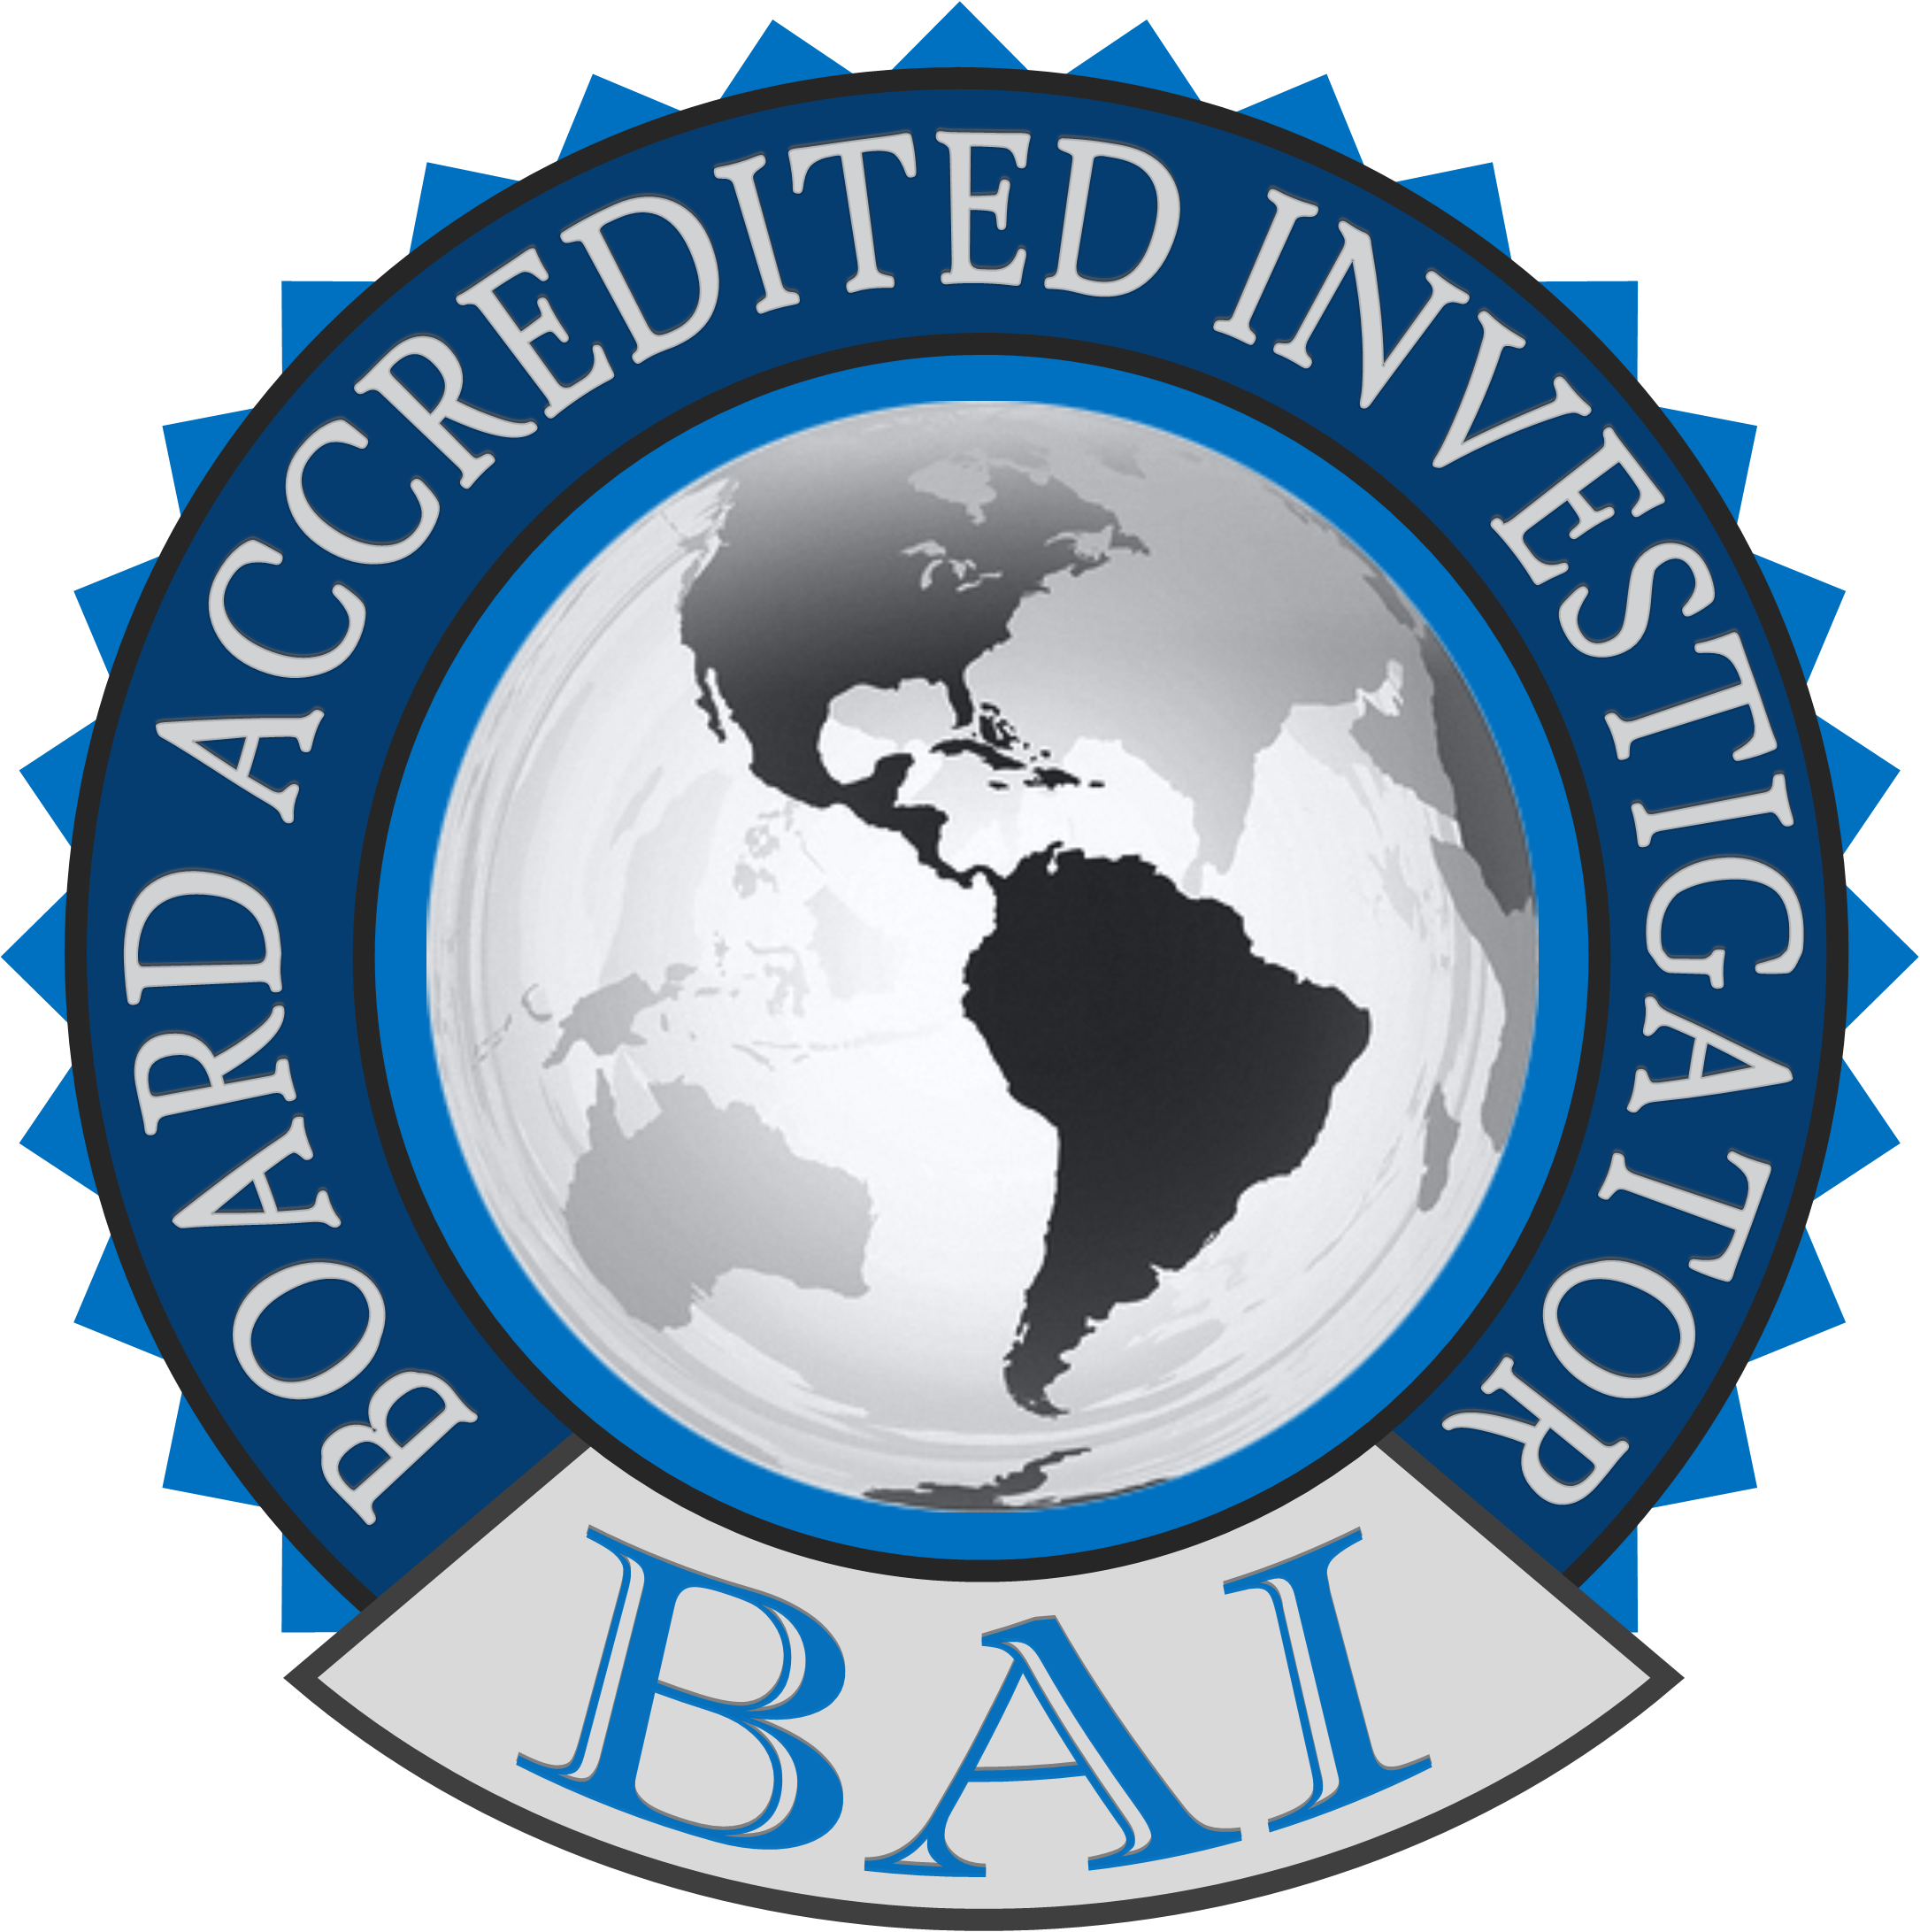 Bai-logo - Fiber Society (2170x2183)